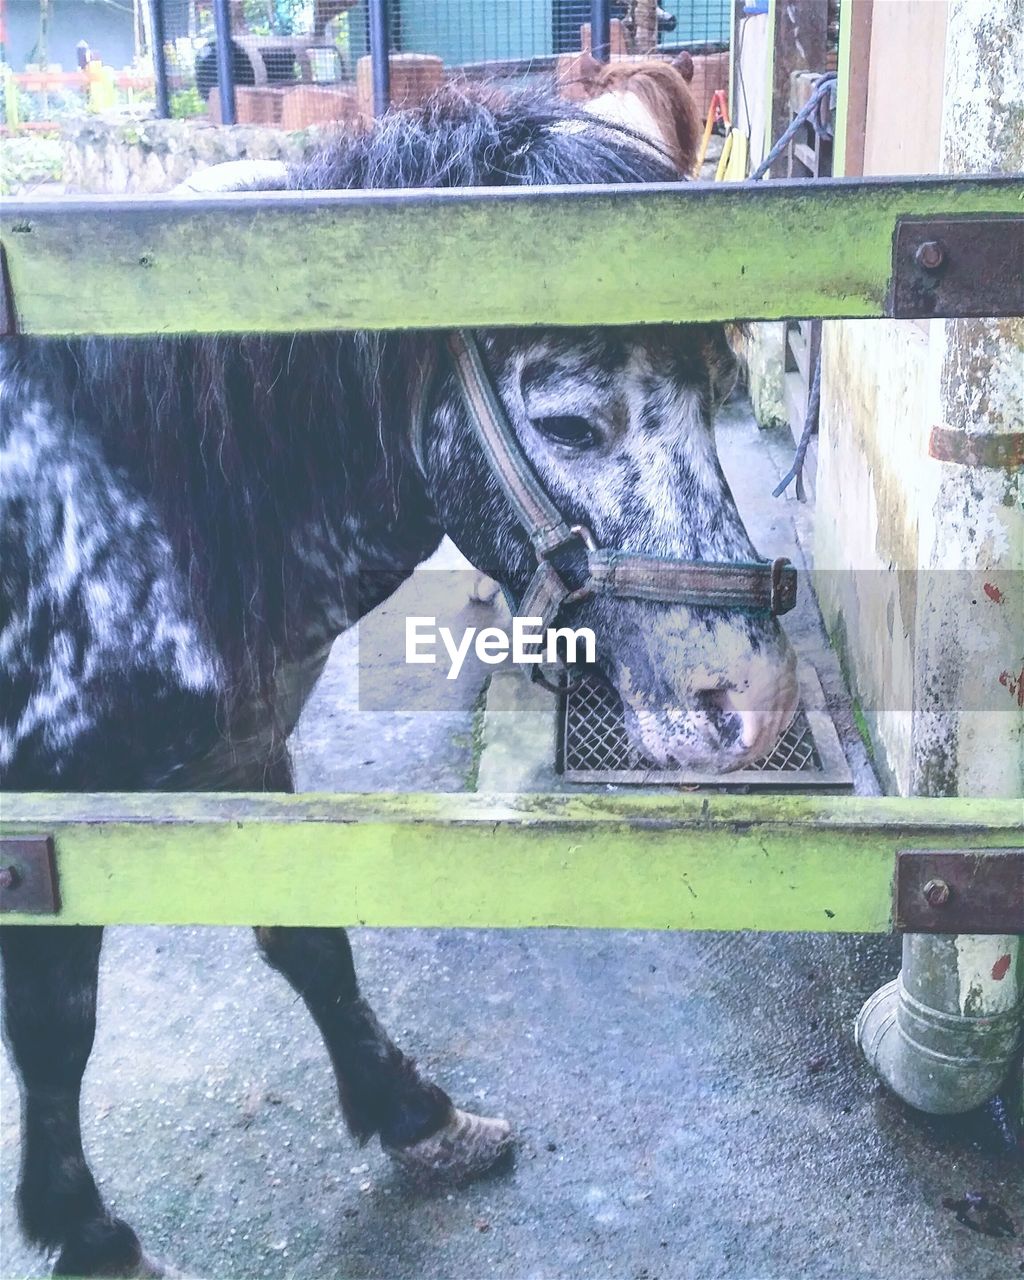 Horses in pen seen through railing